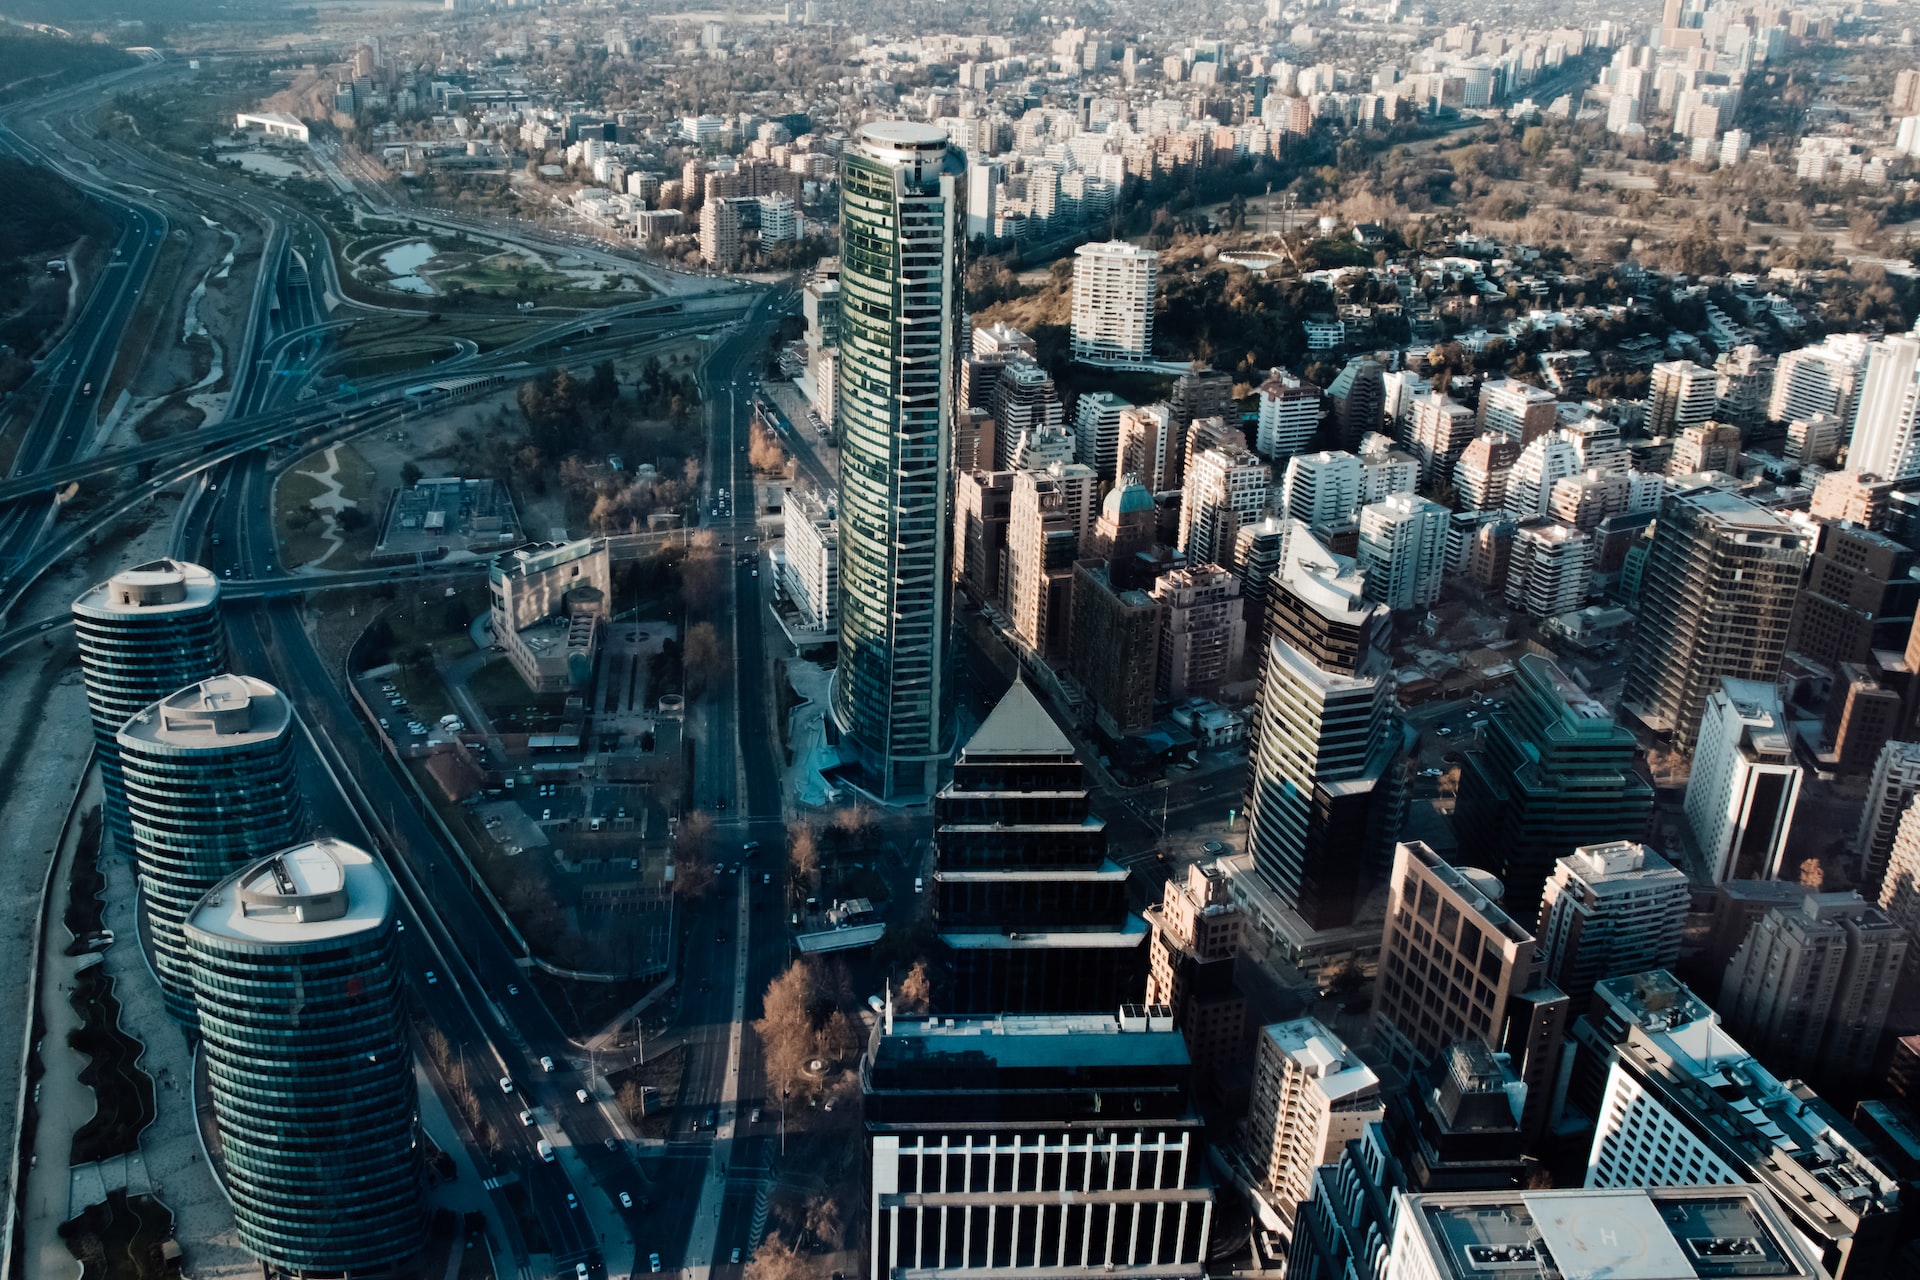 skyscrapers in Chile's capital Santiago